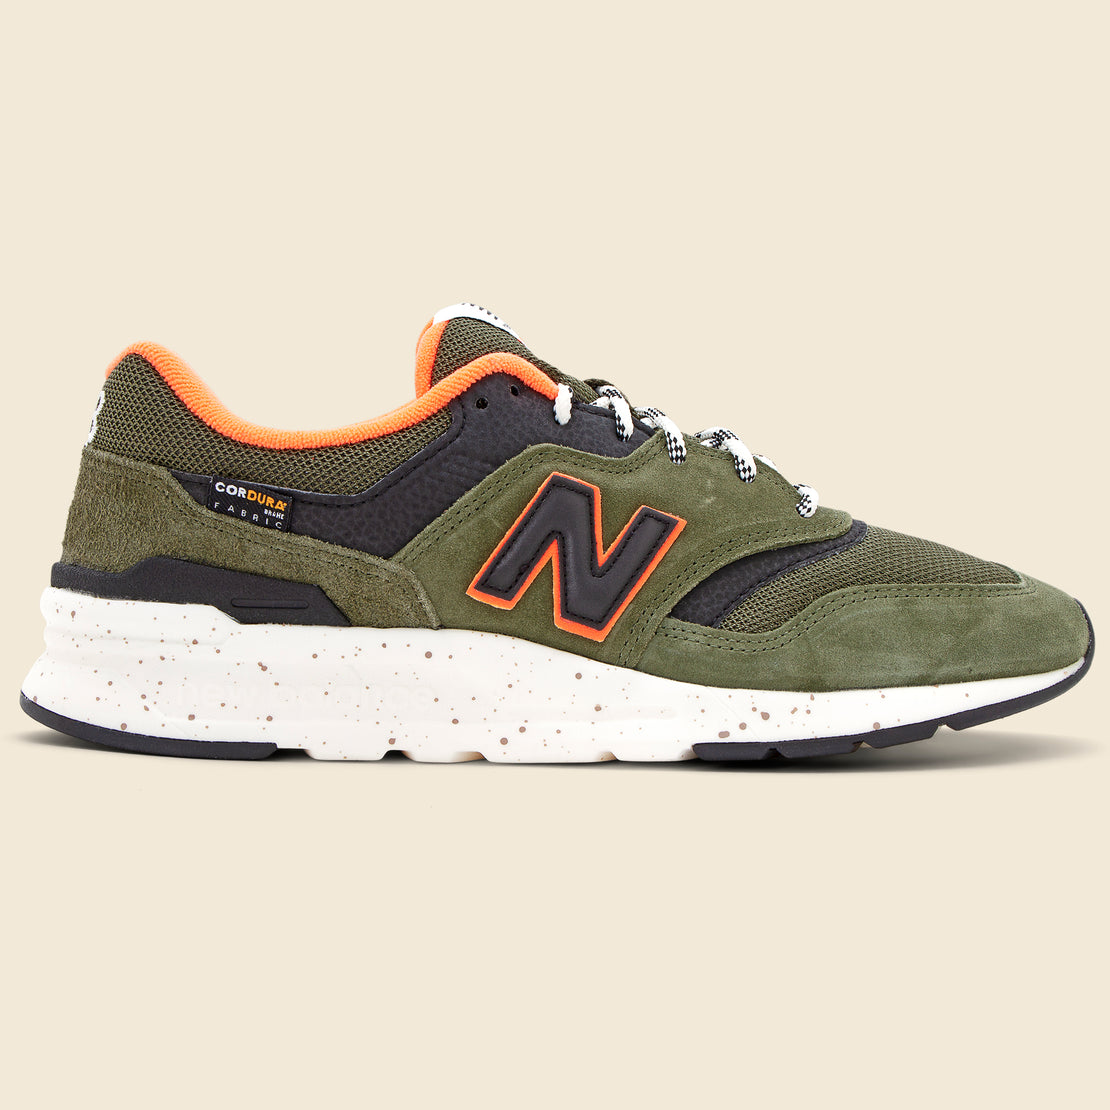 New Balance 997H Sneaker - Green/Black/Orange